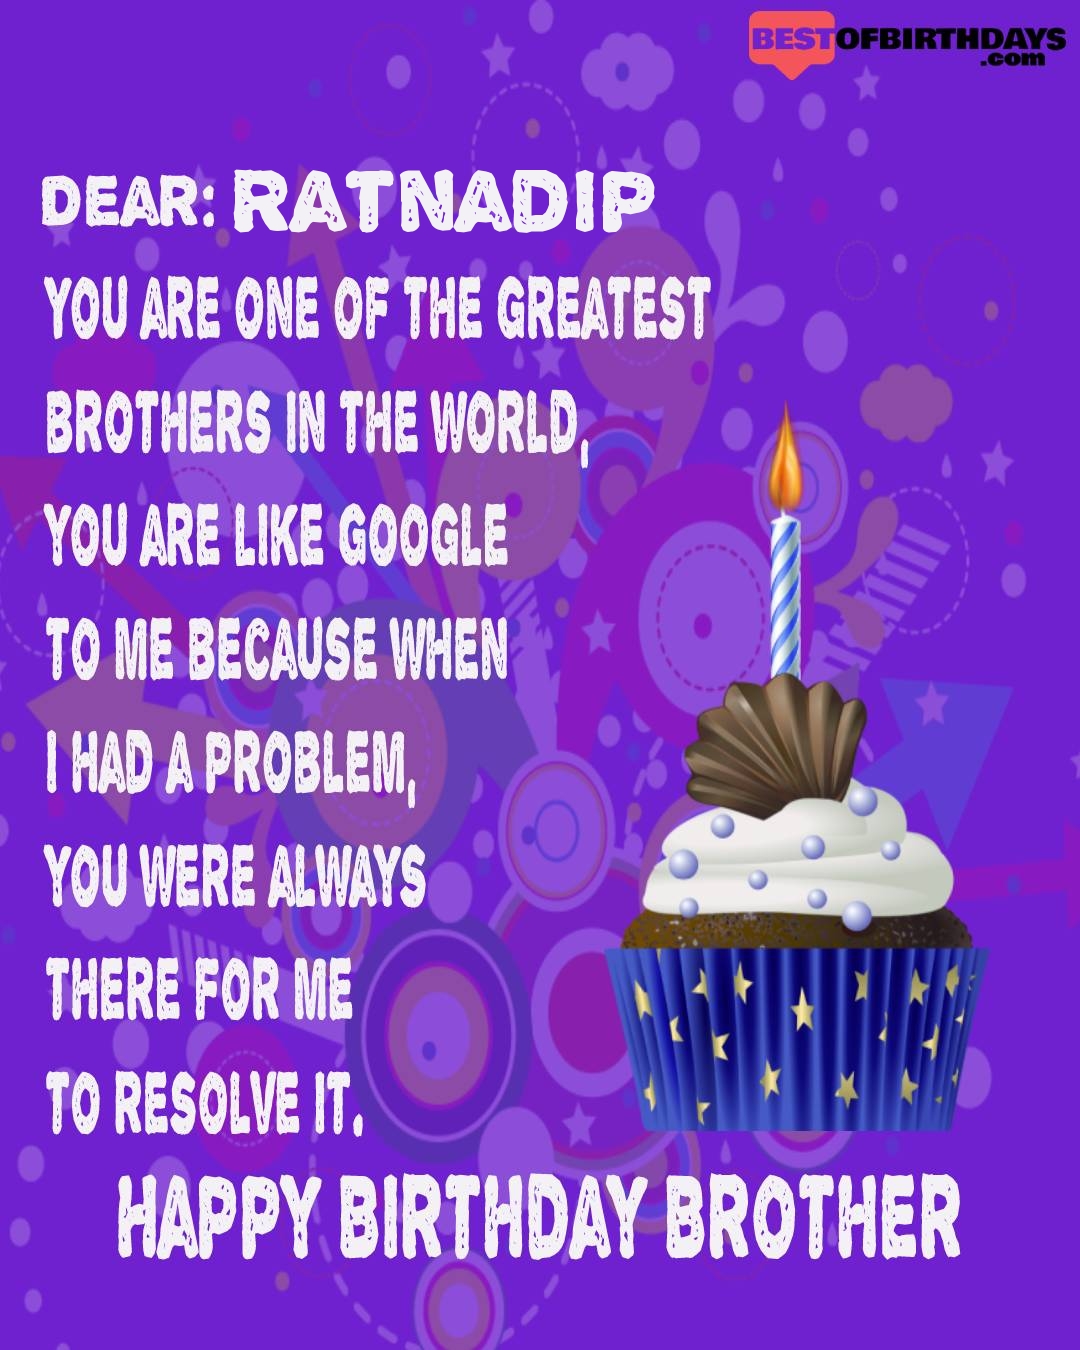 Happy birthday ratnadip bhai brother bro